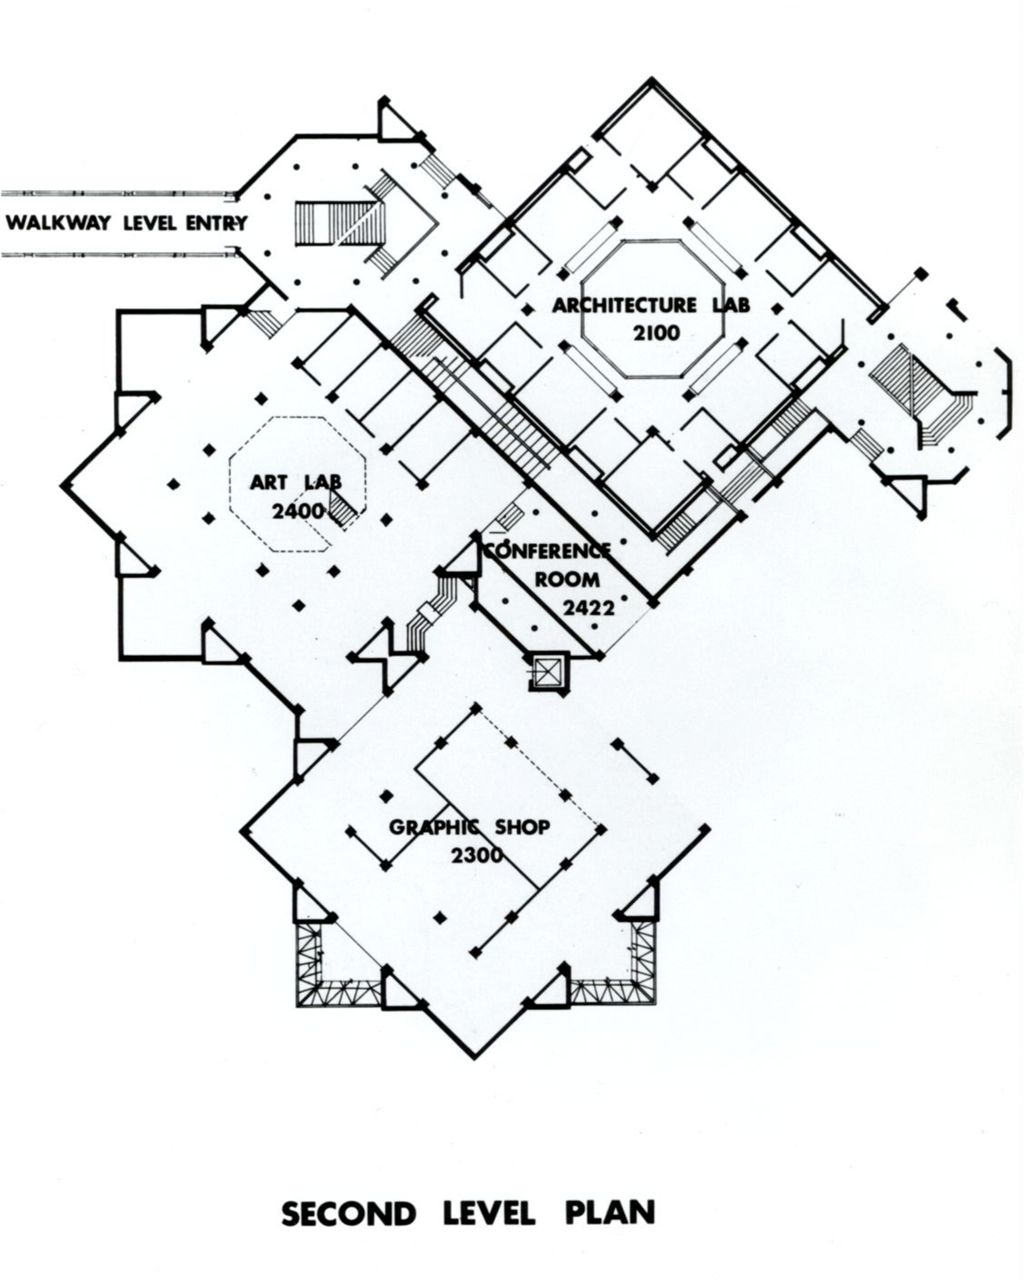 Miniature of Second level floor plan, Architecture and Design Studios